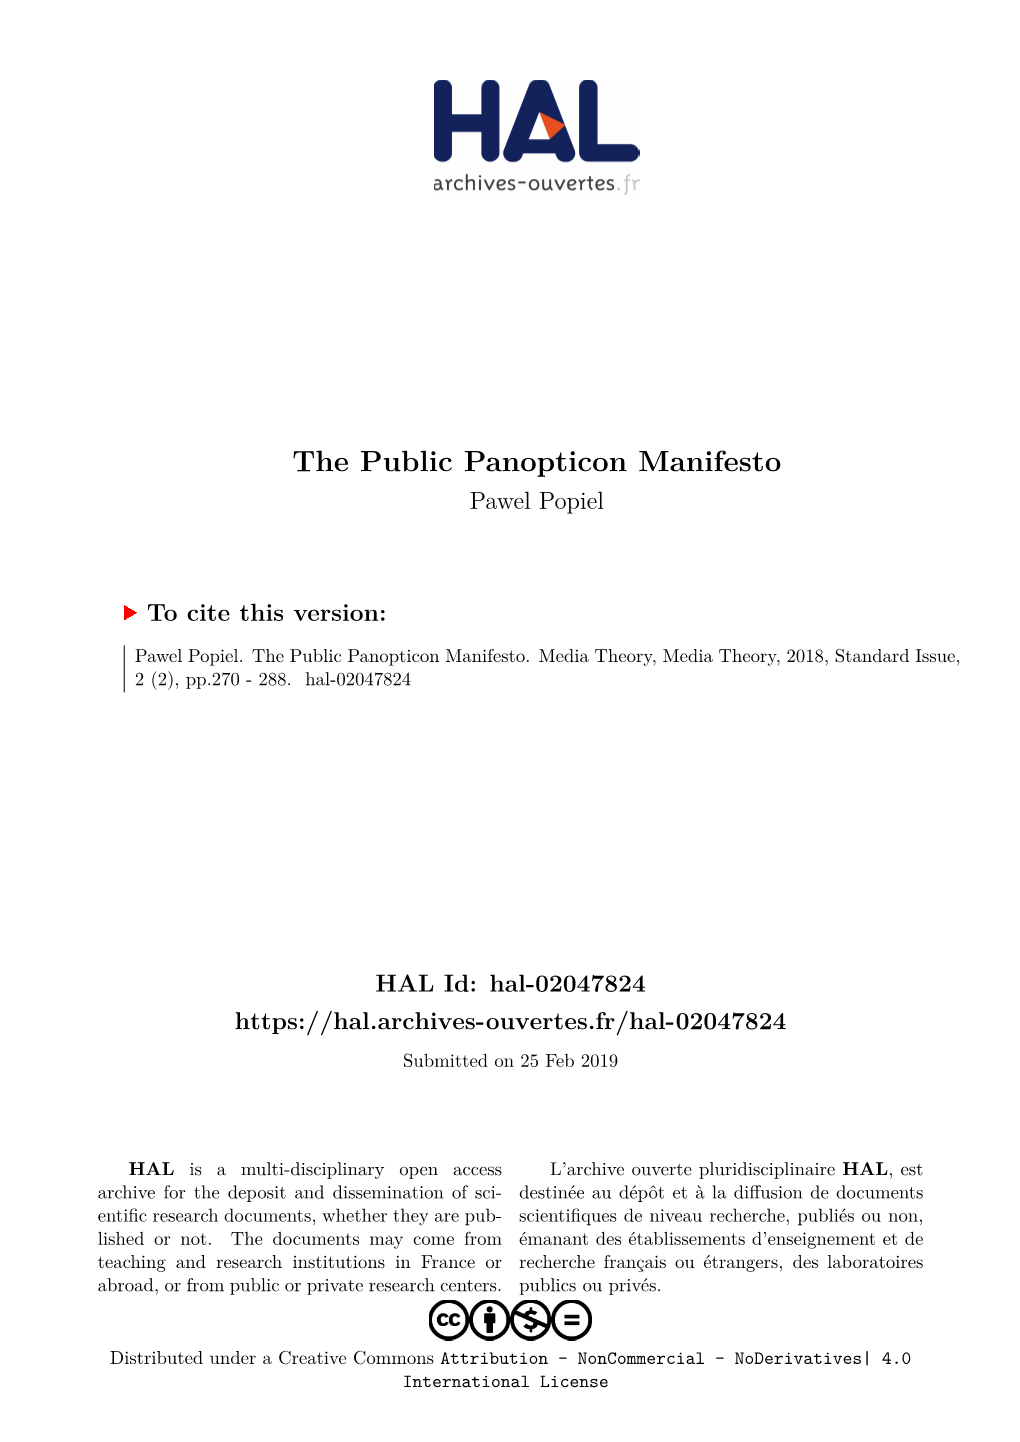 The Public Panopticon Manifesto Pawel Popiel